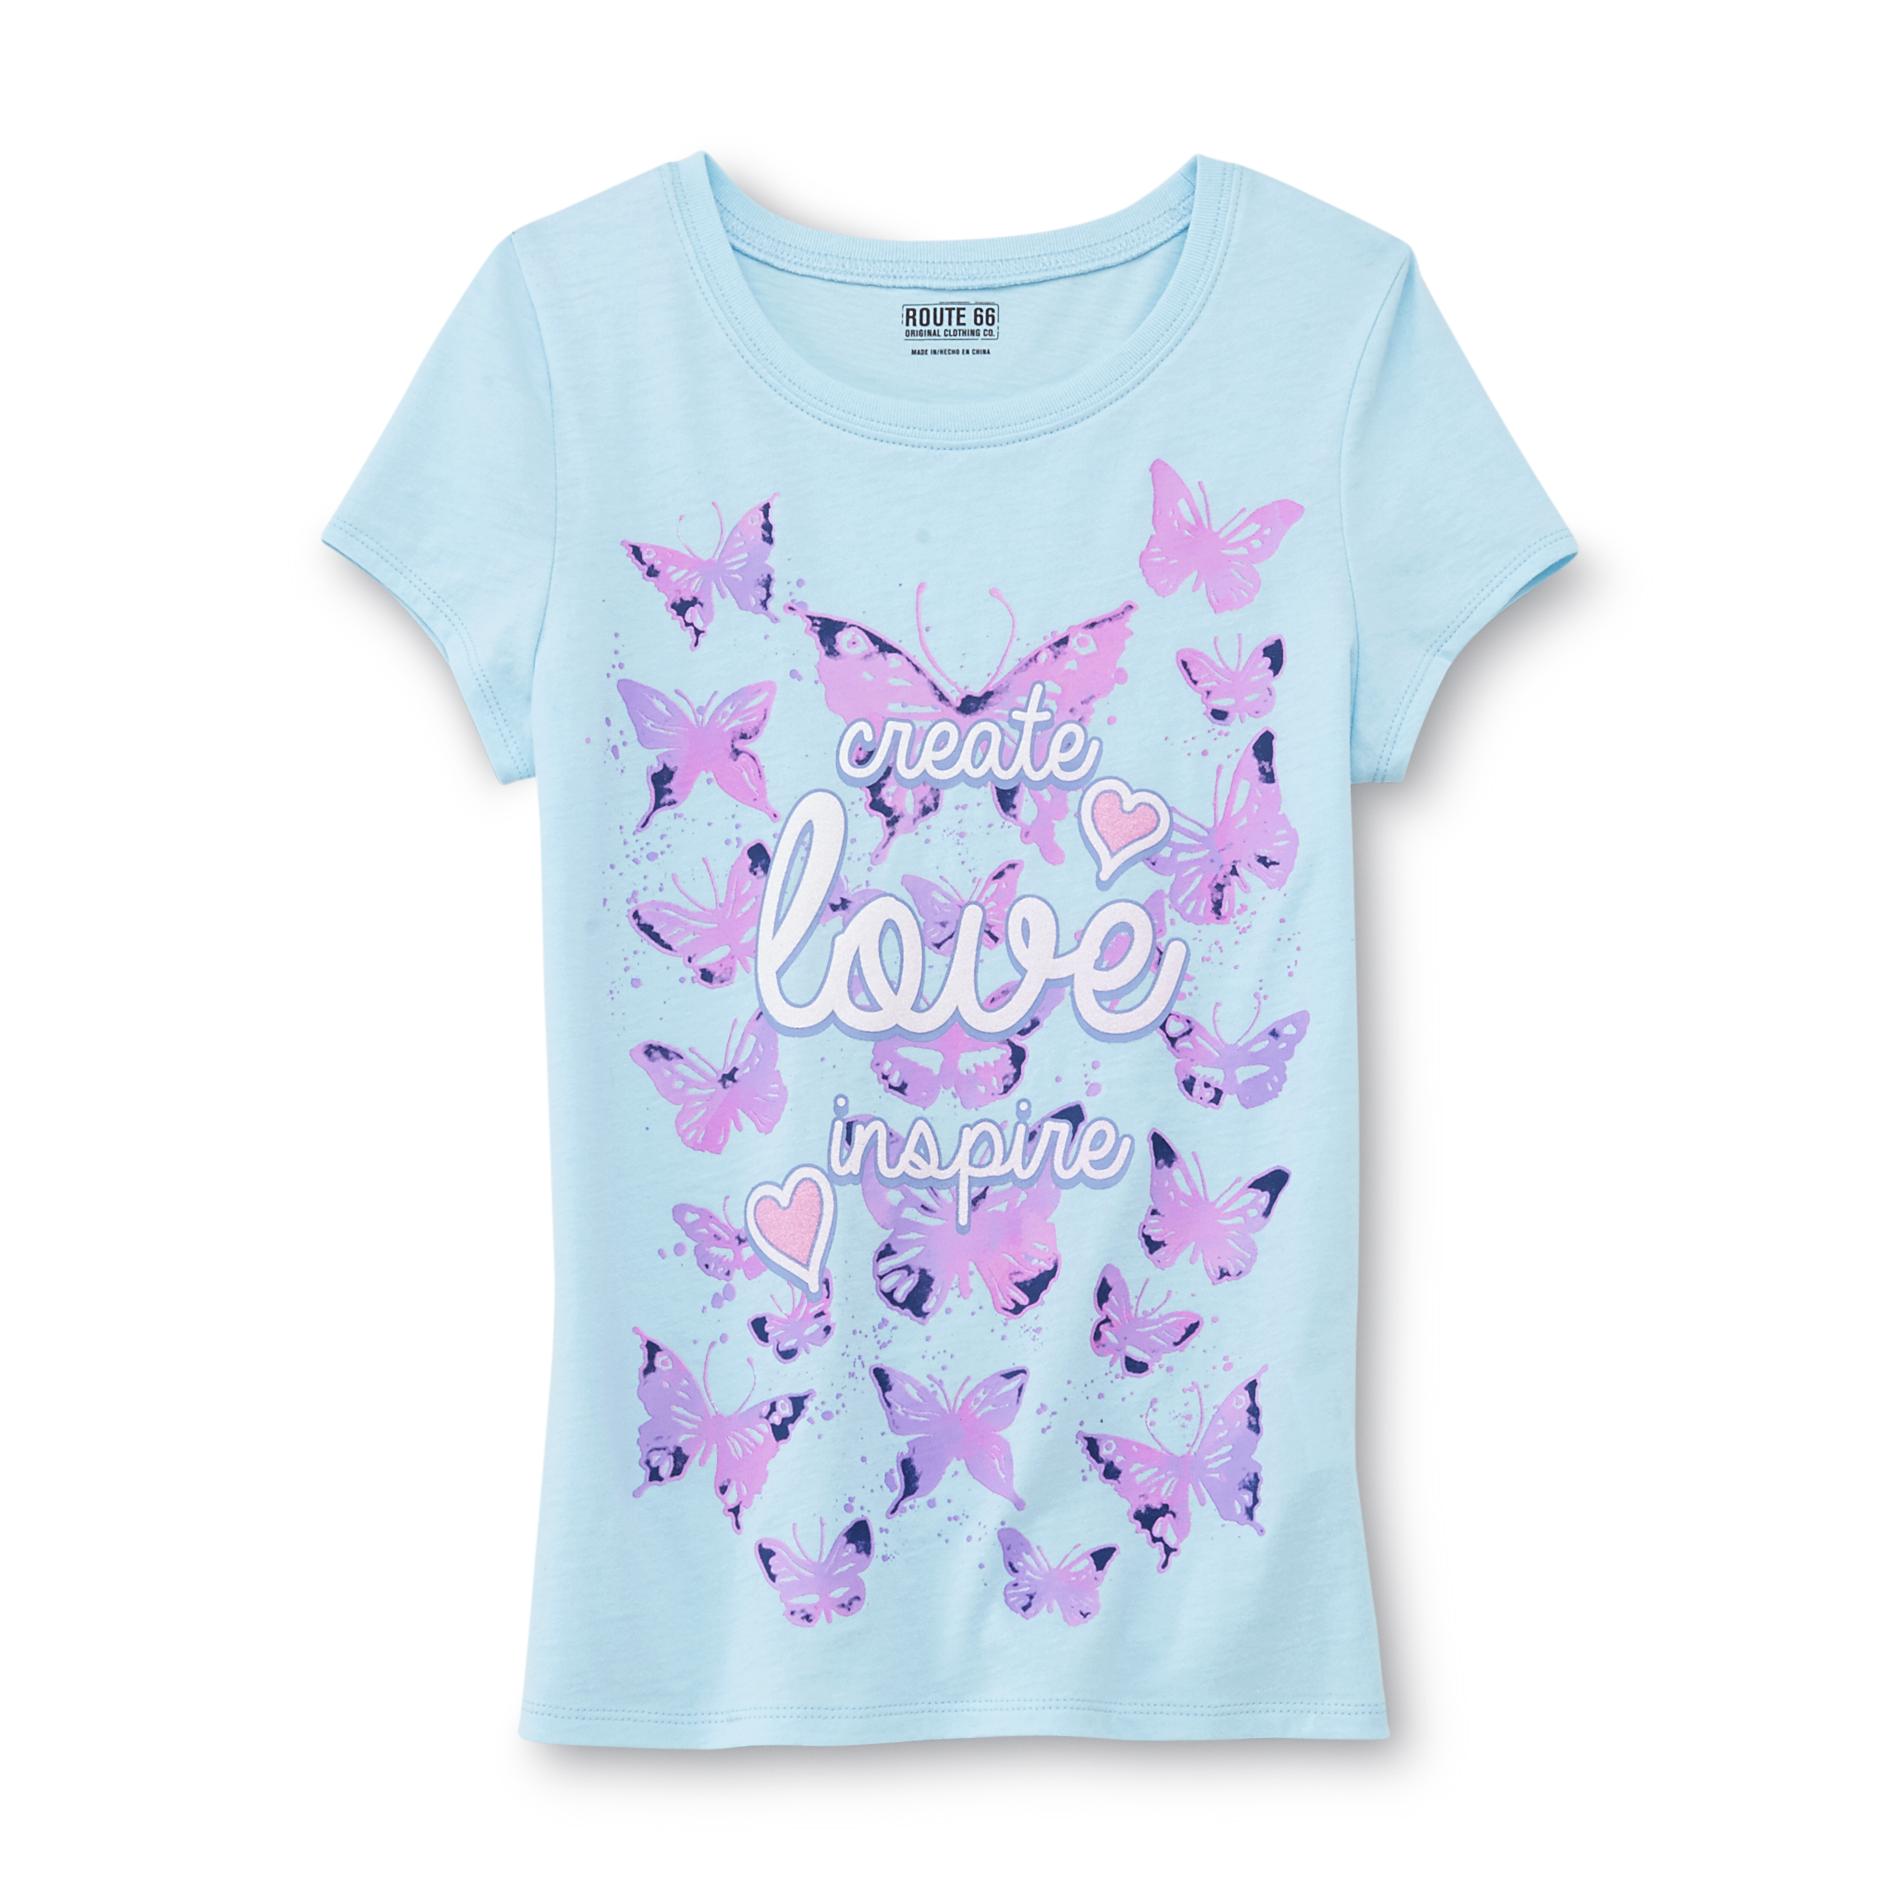 Route 66 Girl's Graphic T-Shirt - Butterflies